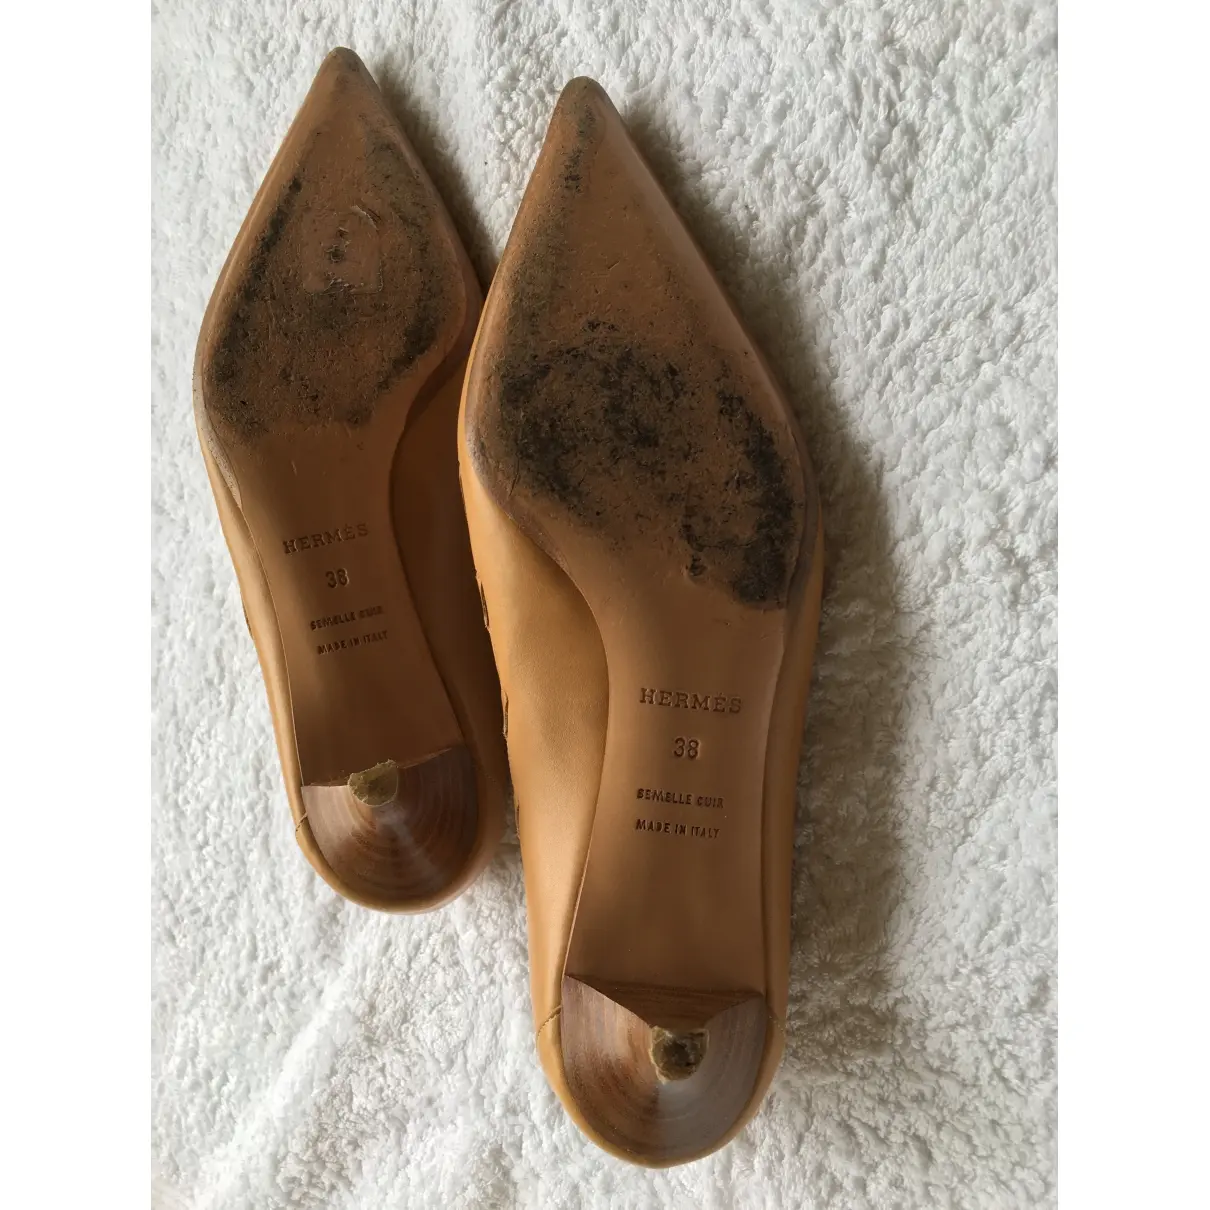 Buy Hermès Scarlett leather heels online